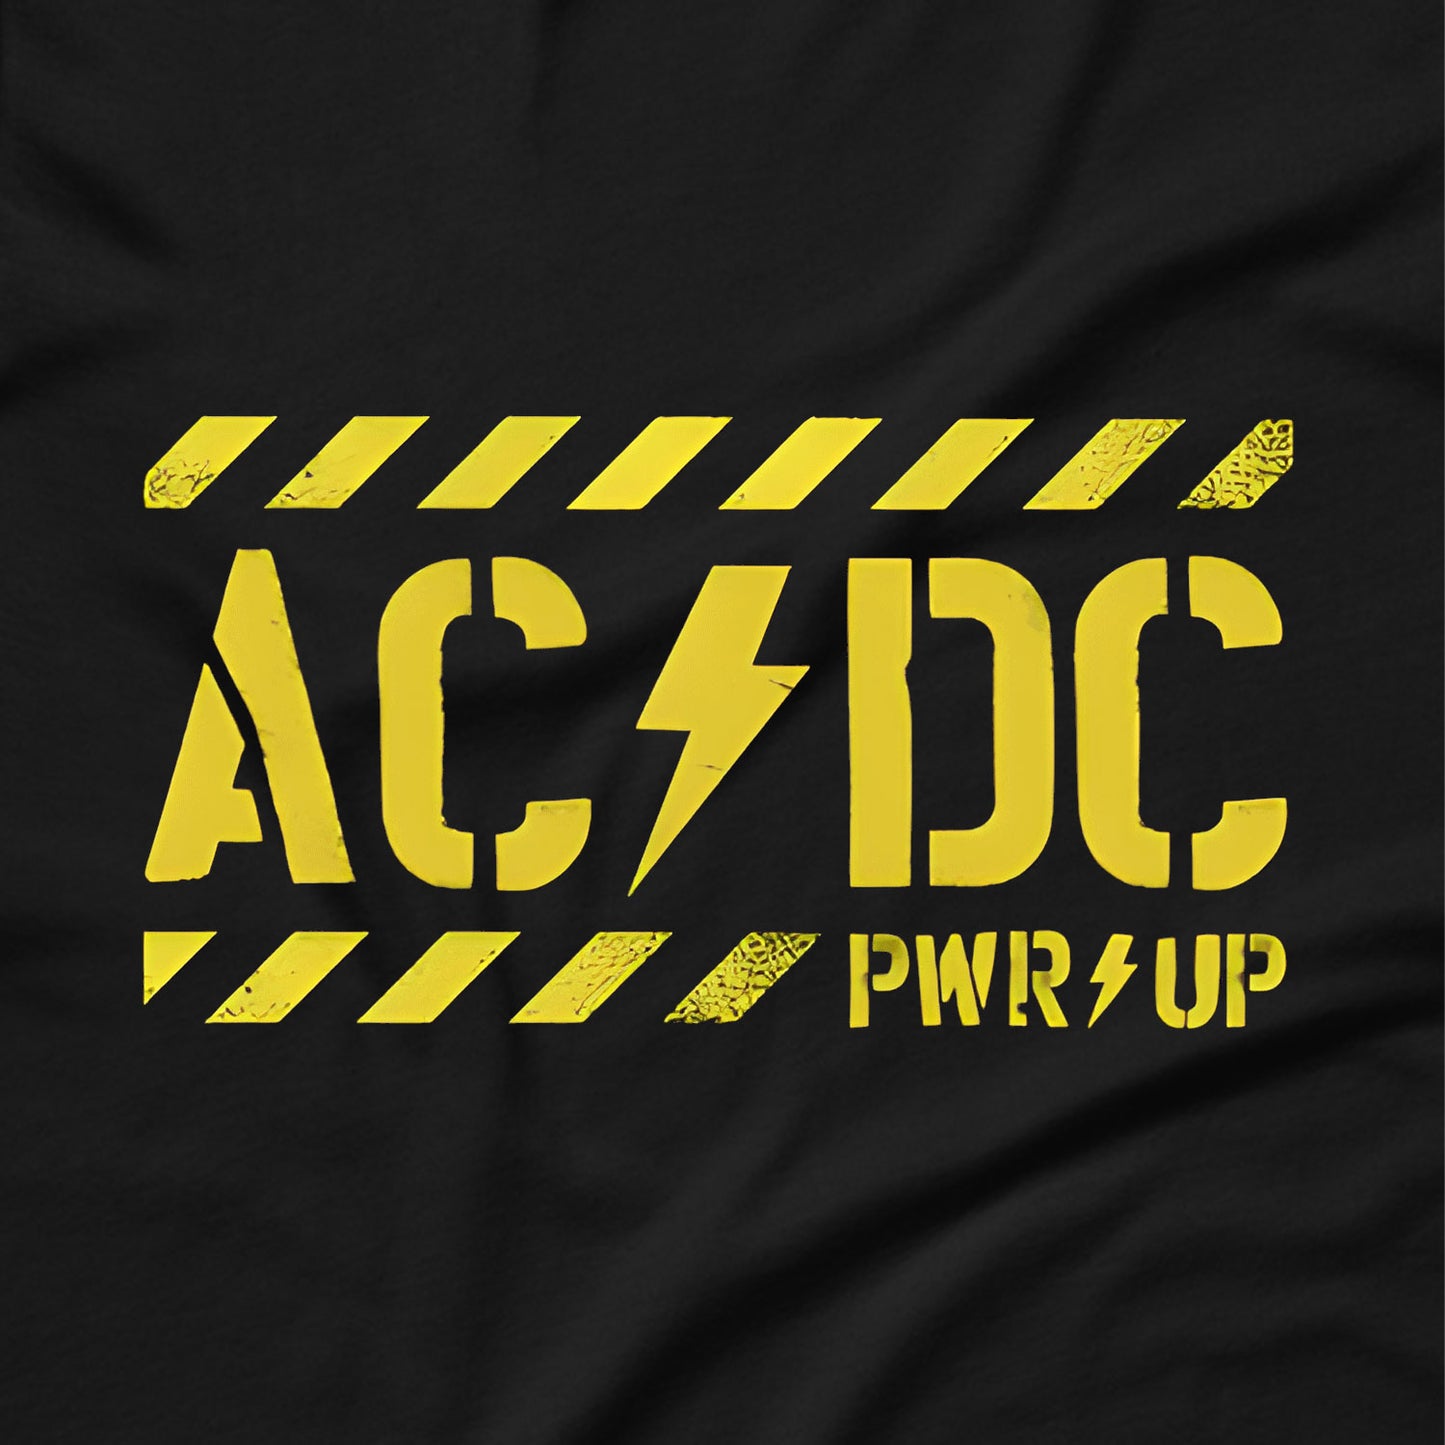 AC DC - PWR Up T-Shirt